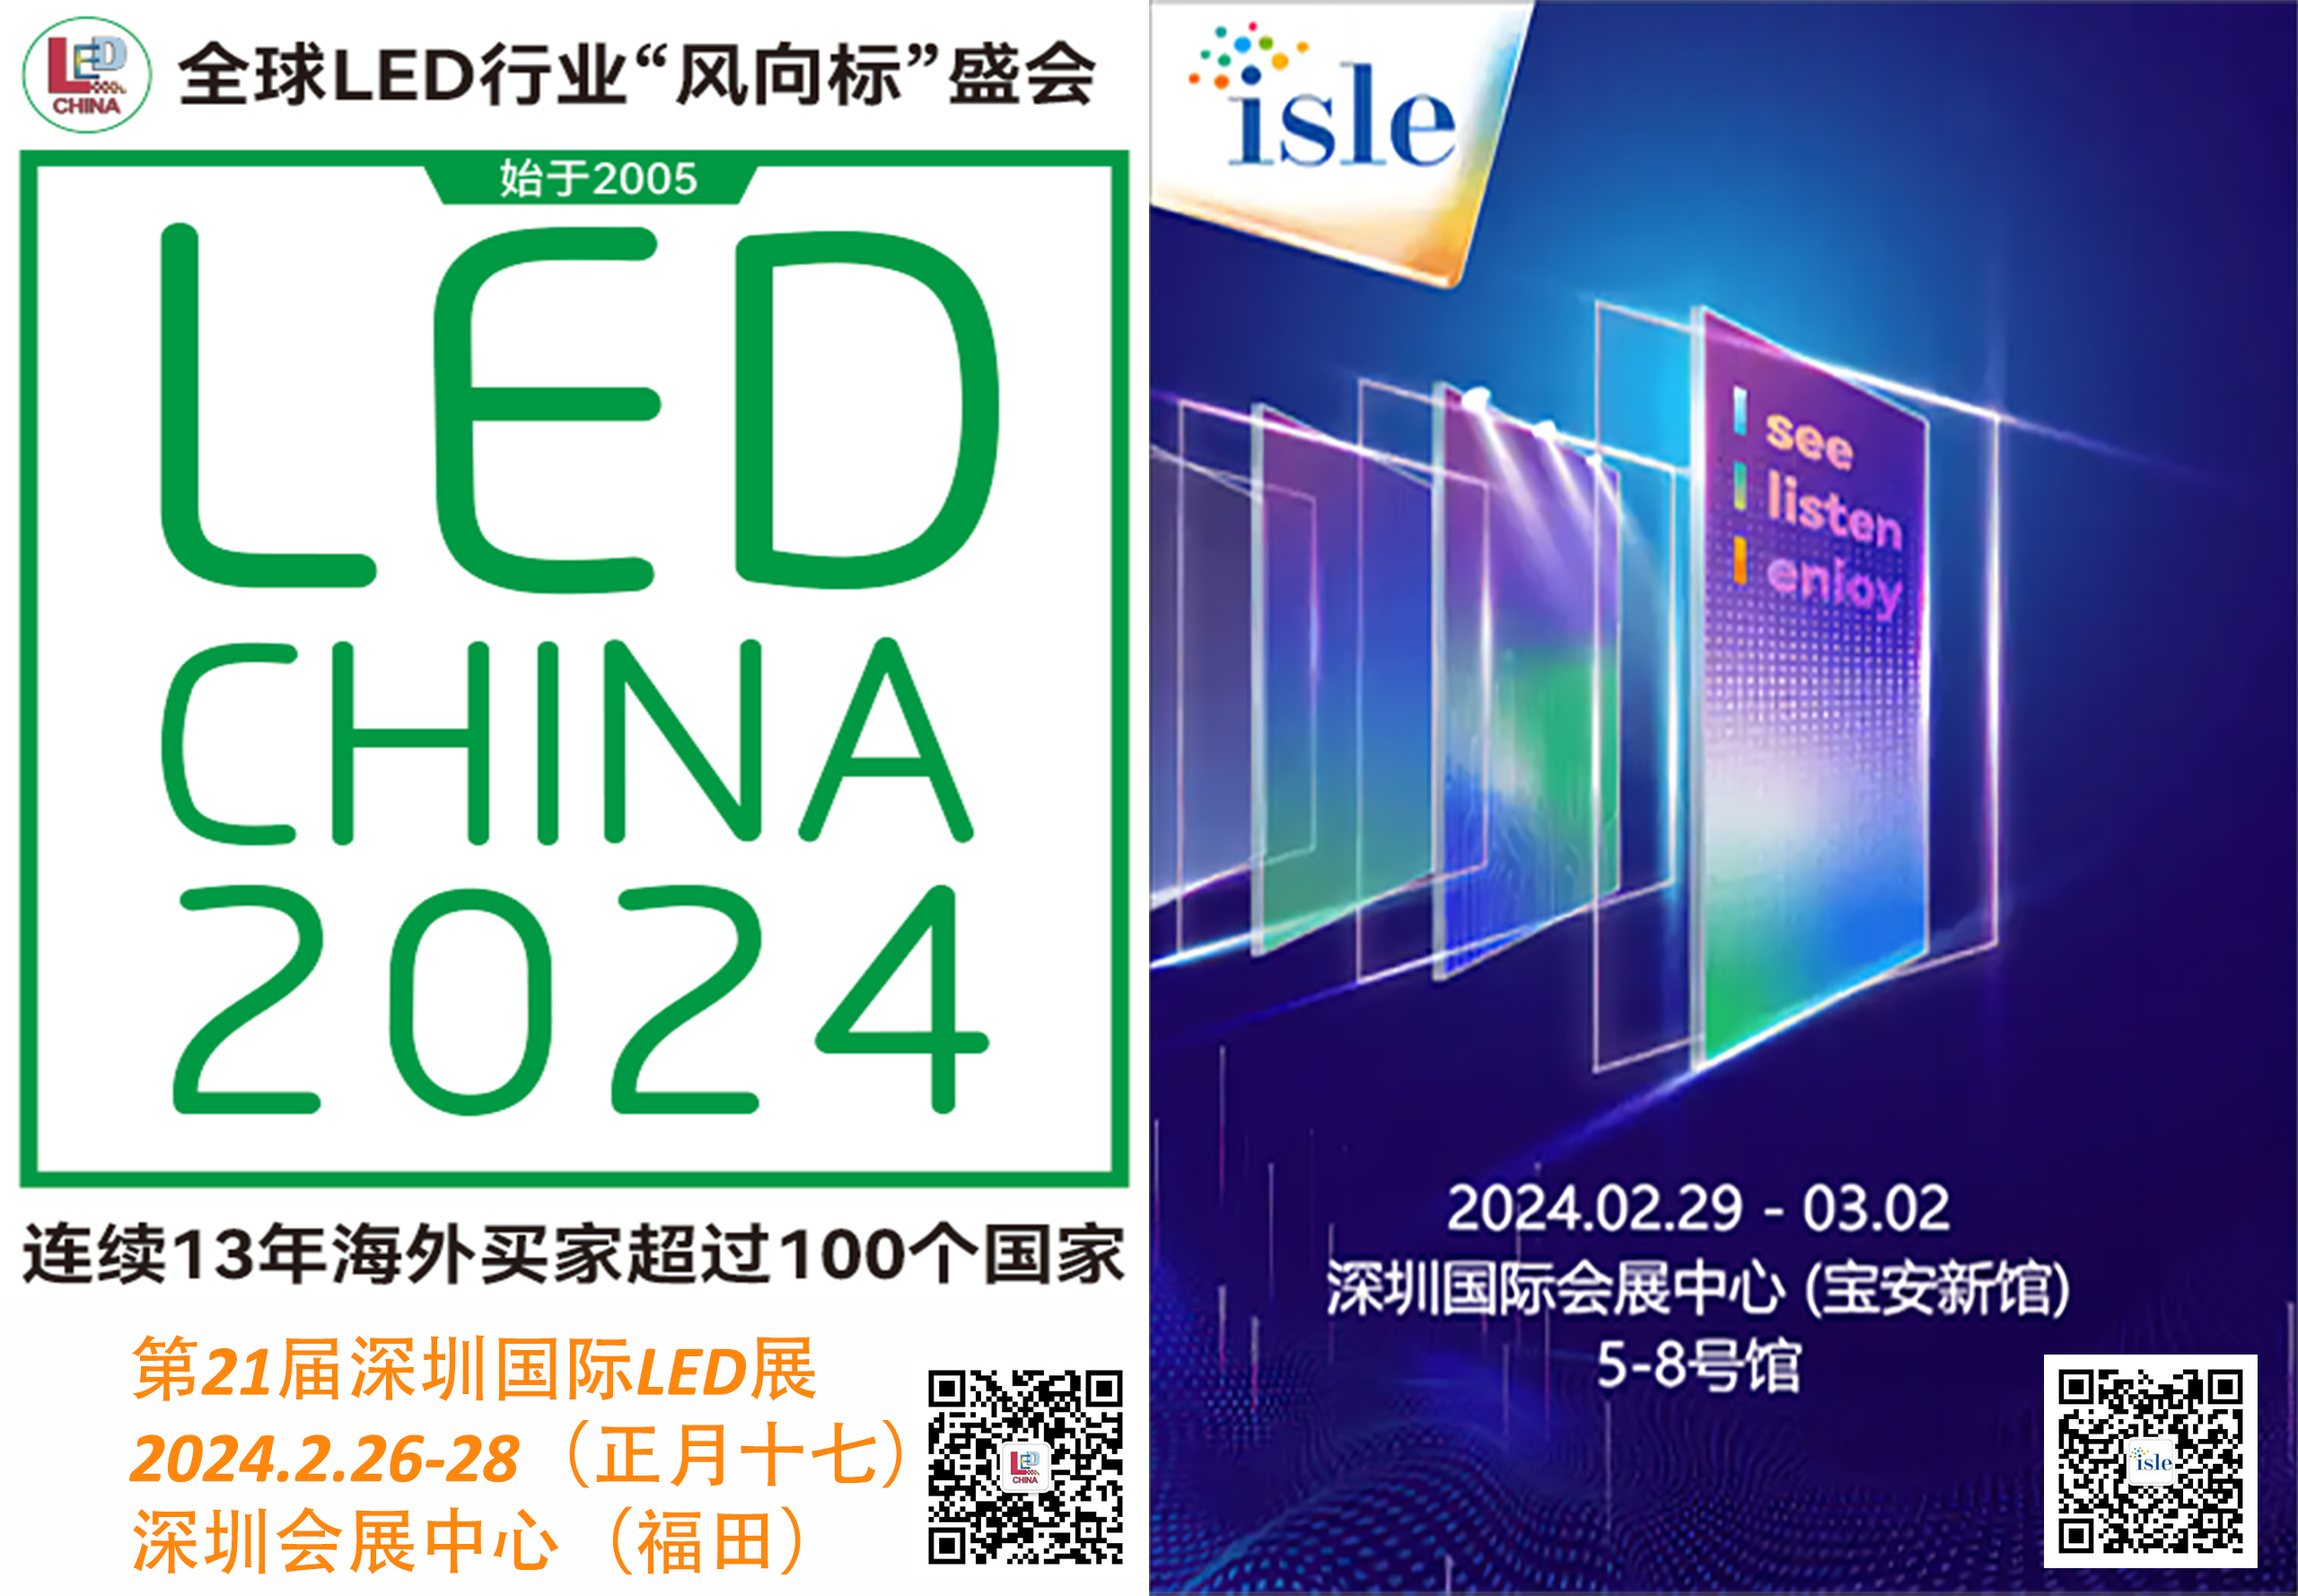 LED, ISLE mette in mostra le più recenti tecnologie per i LED e i display intelligenti